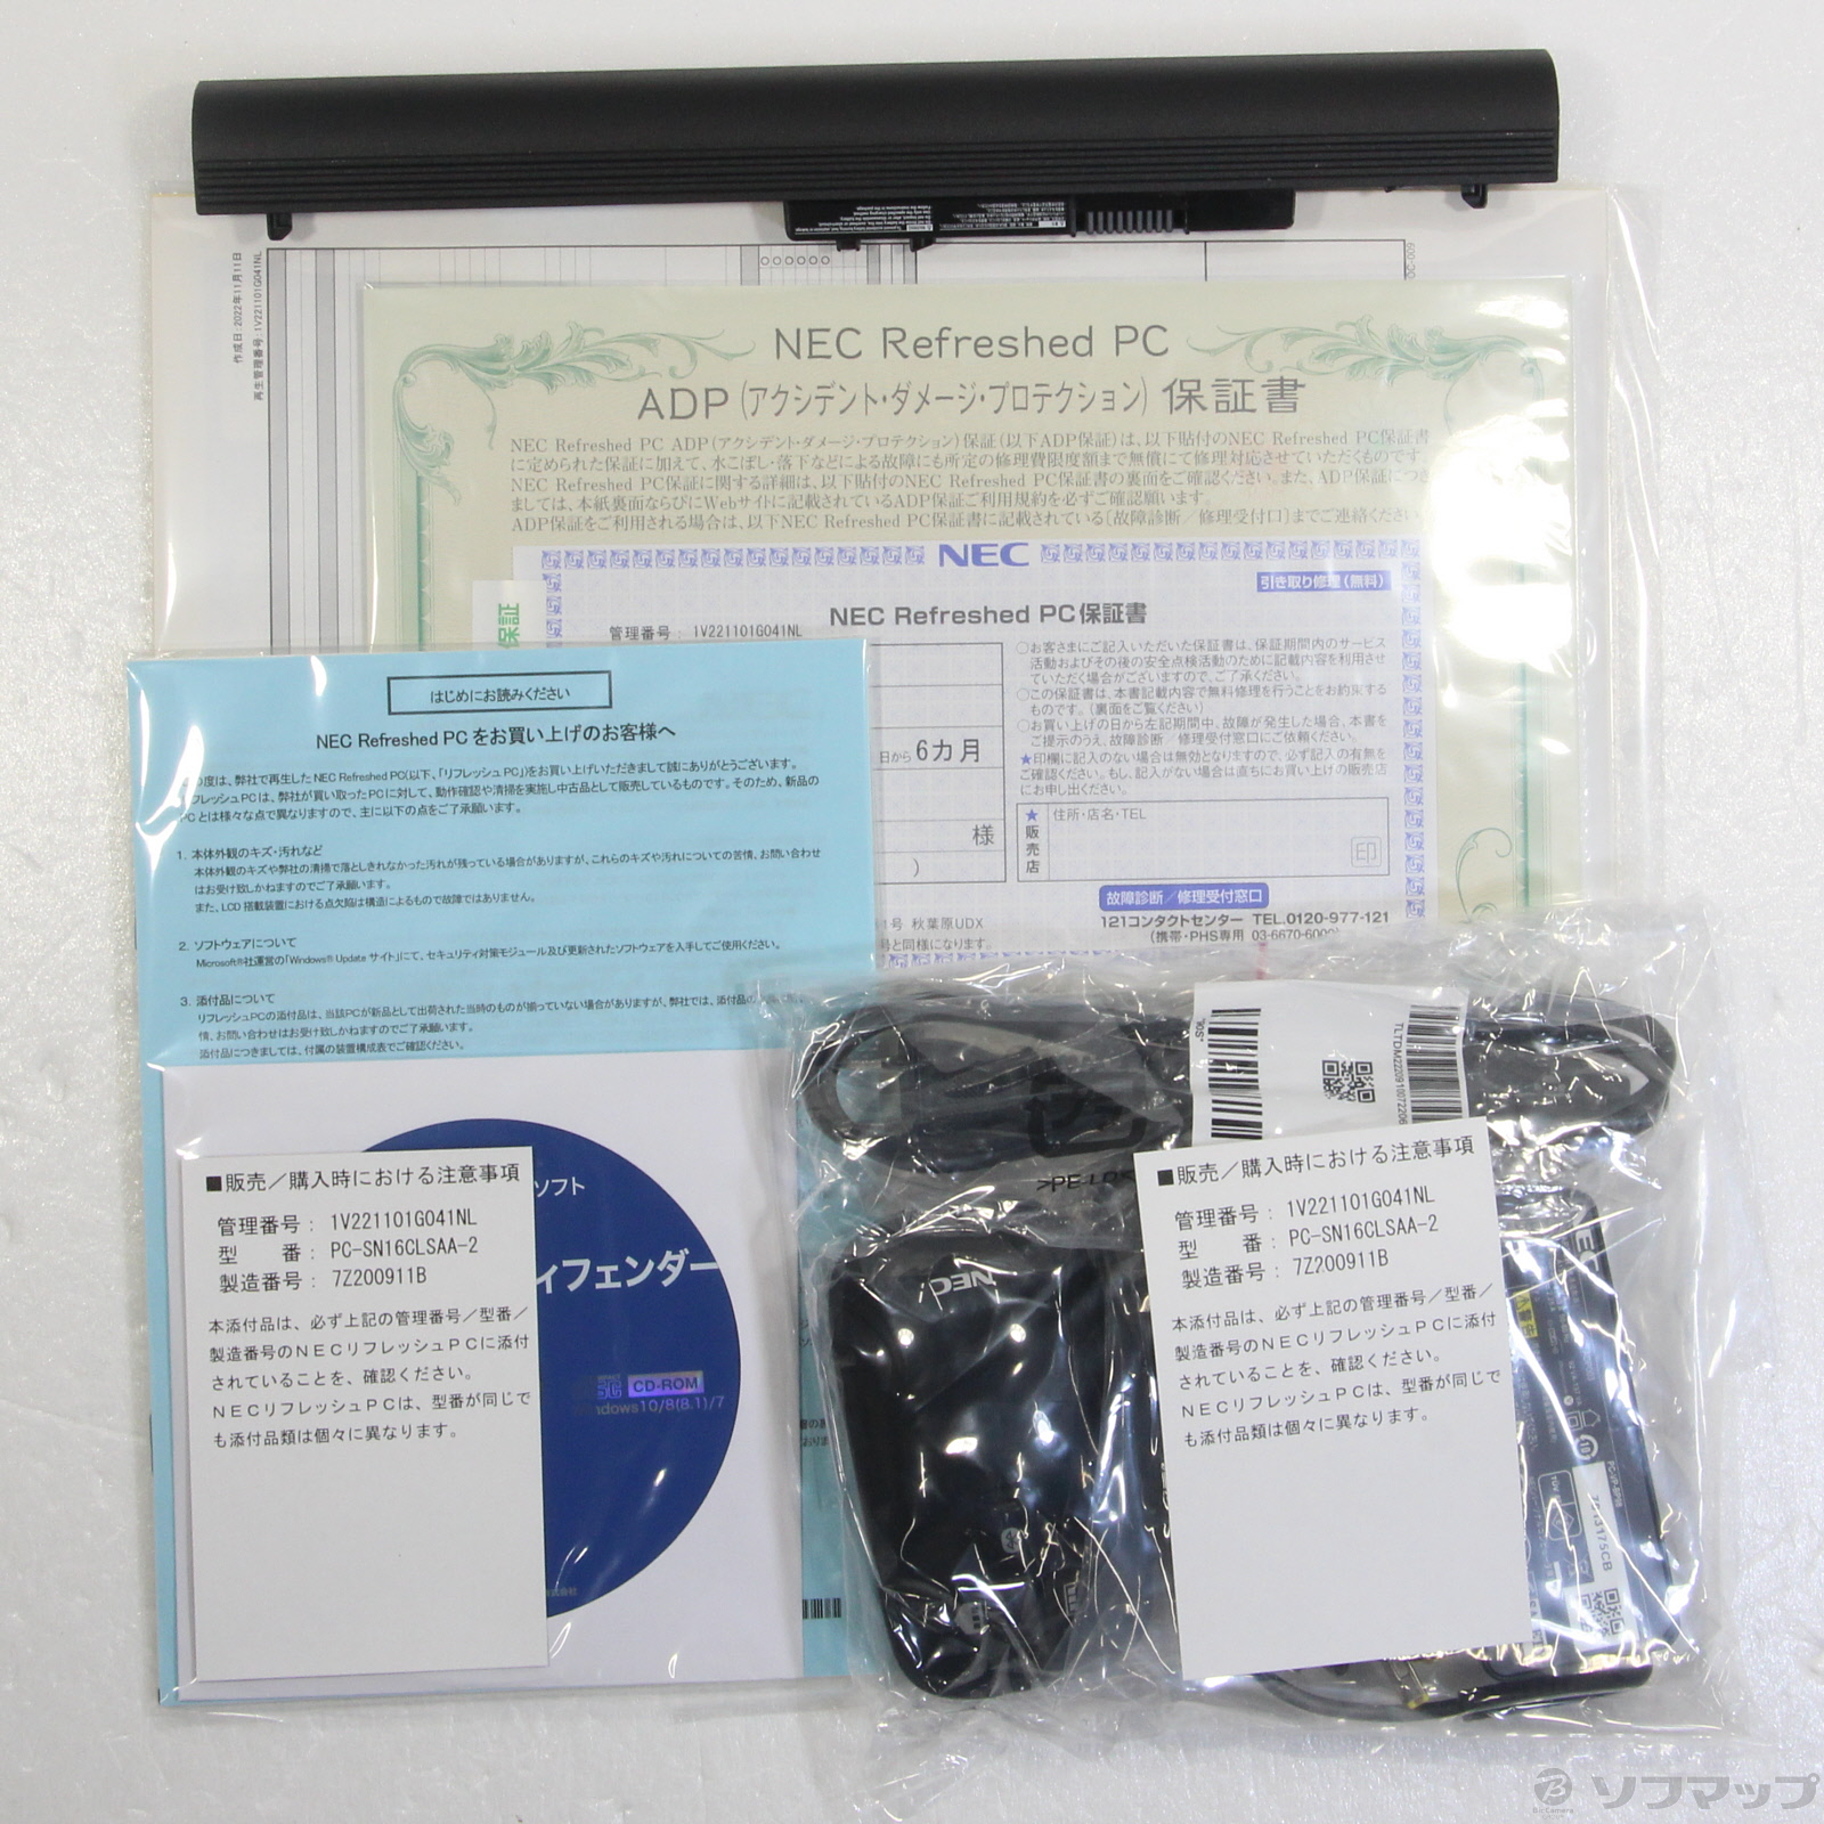 中古】LAVIE Smart NS PC-SN16CLSAA-2 〔NEC Refreshed PC〕 〔Windows